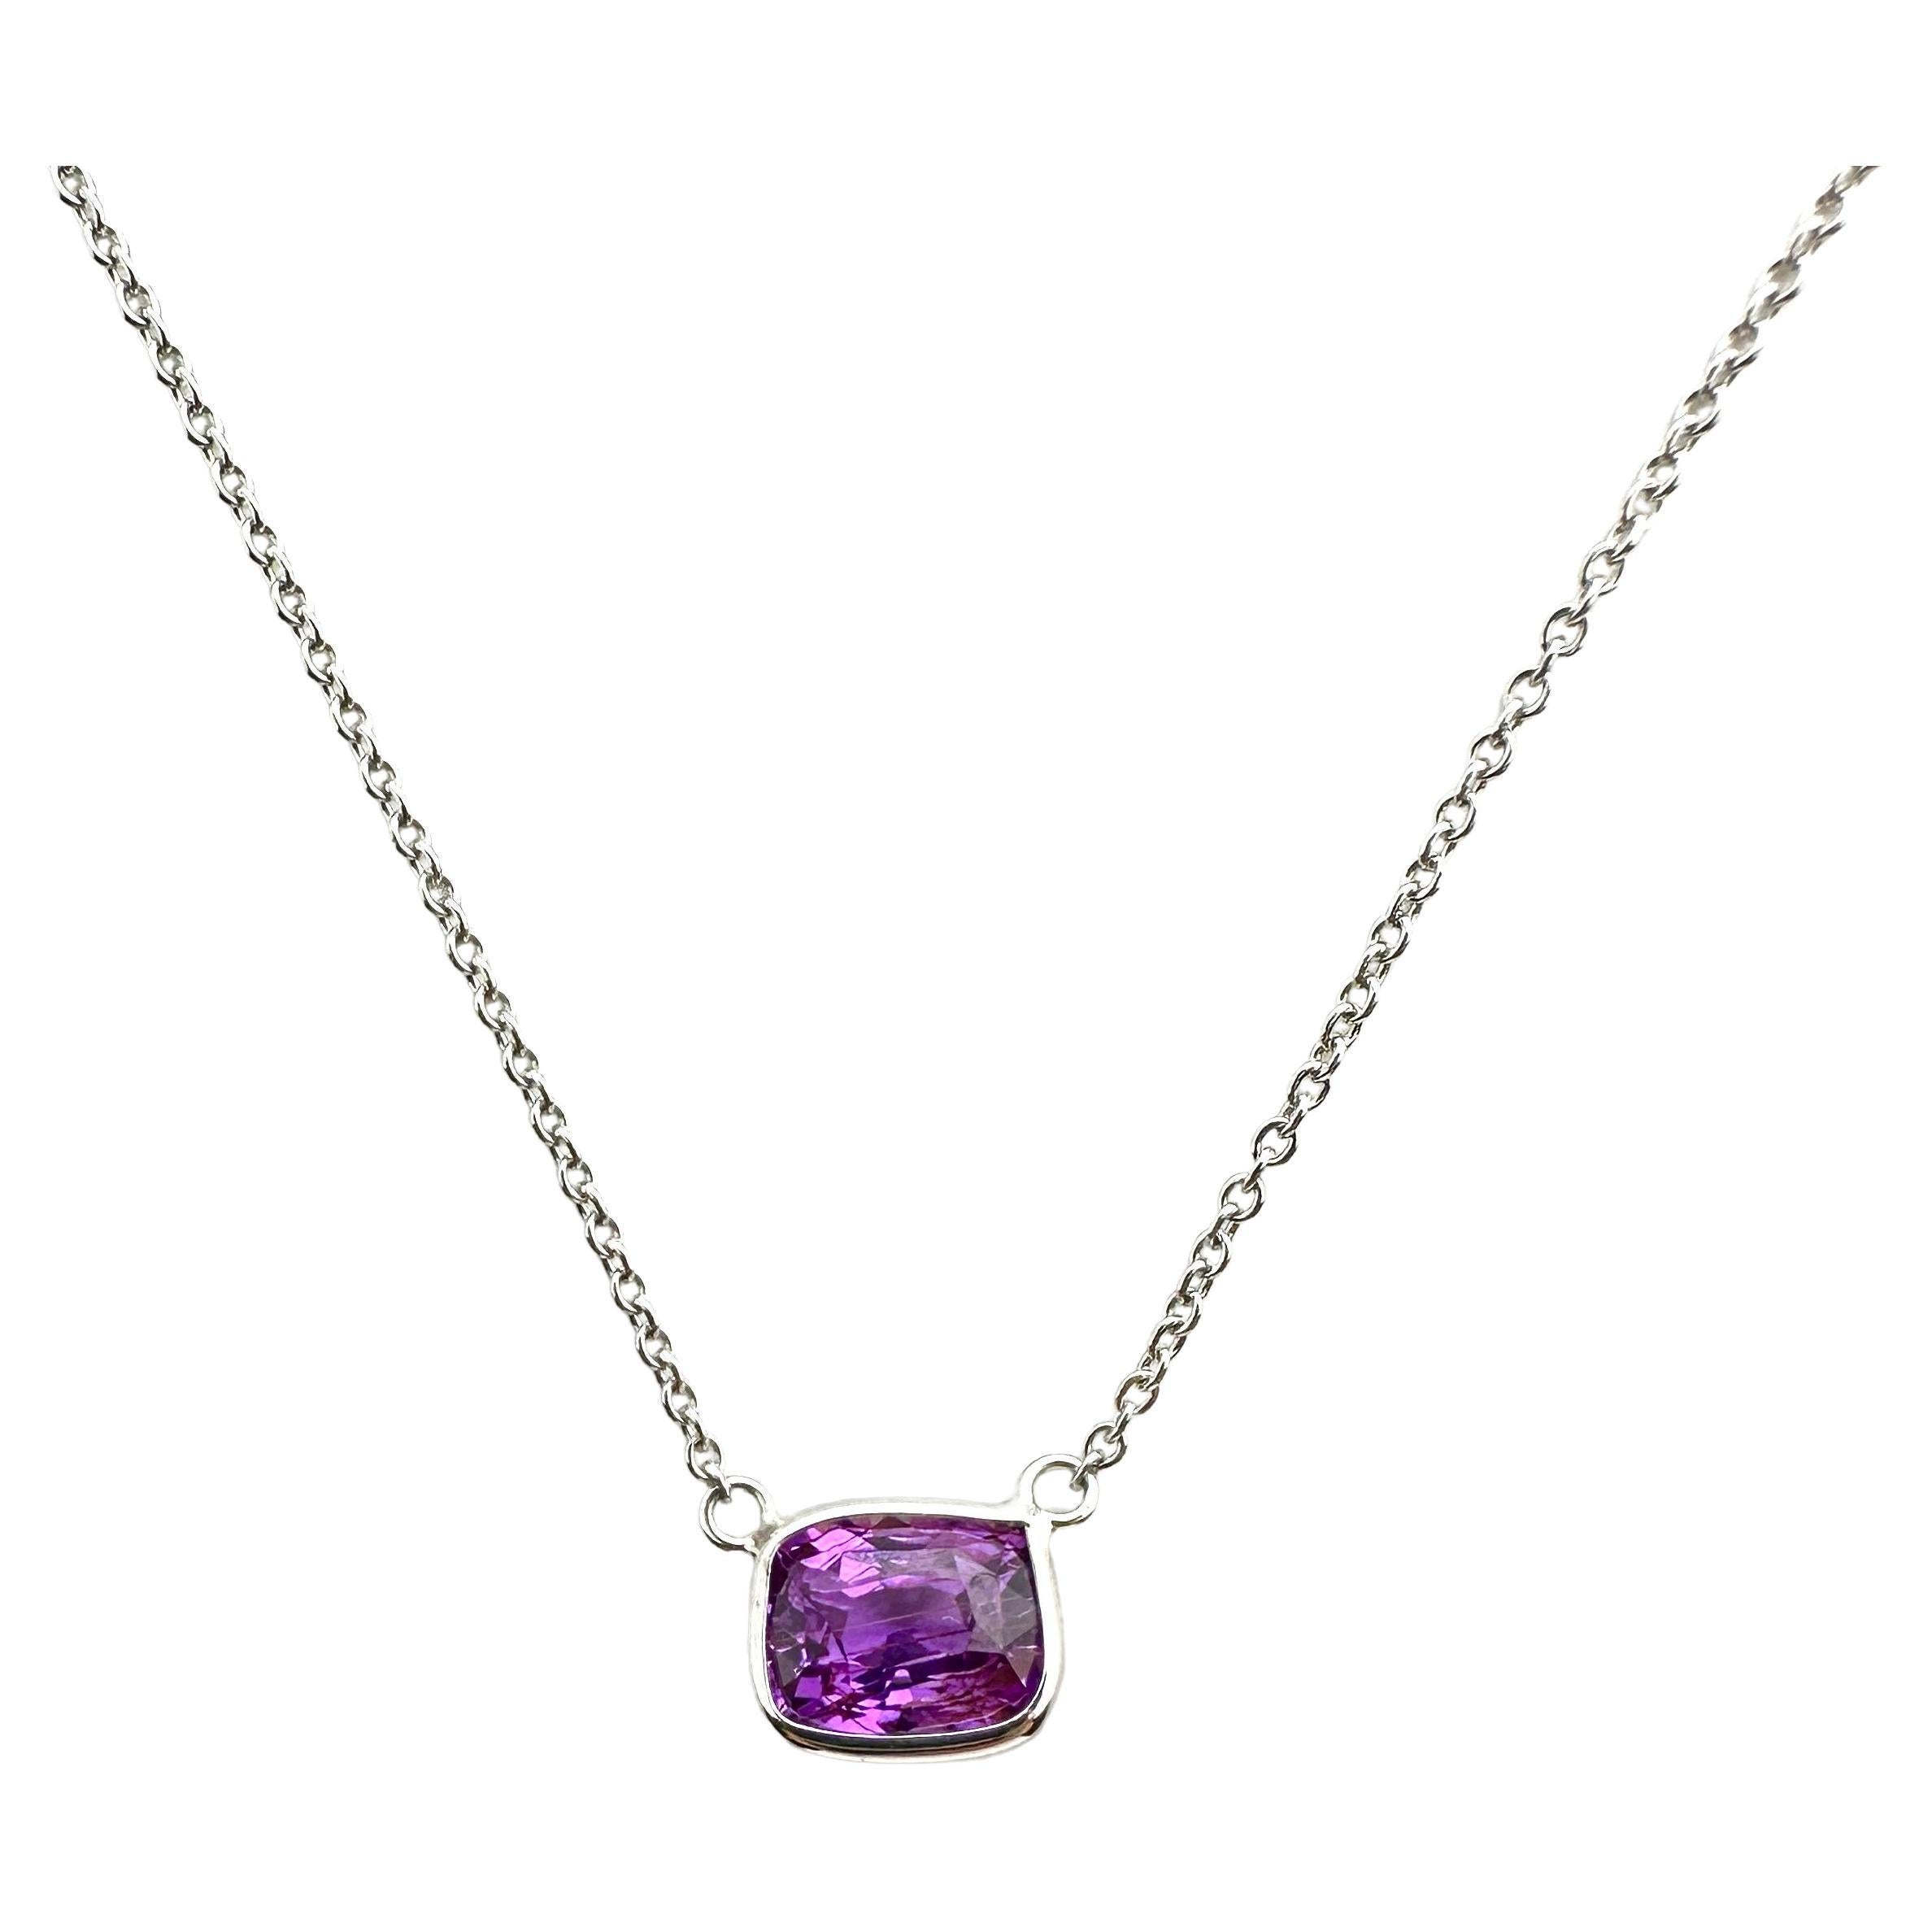 1.59 Carat Sapphire Purple Cushion & Fashion Necklaces Berberyn Cert In 14K WG For Sale